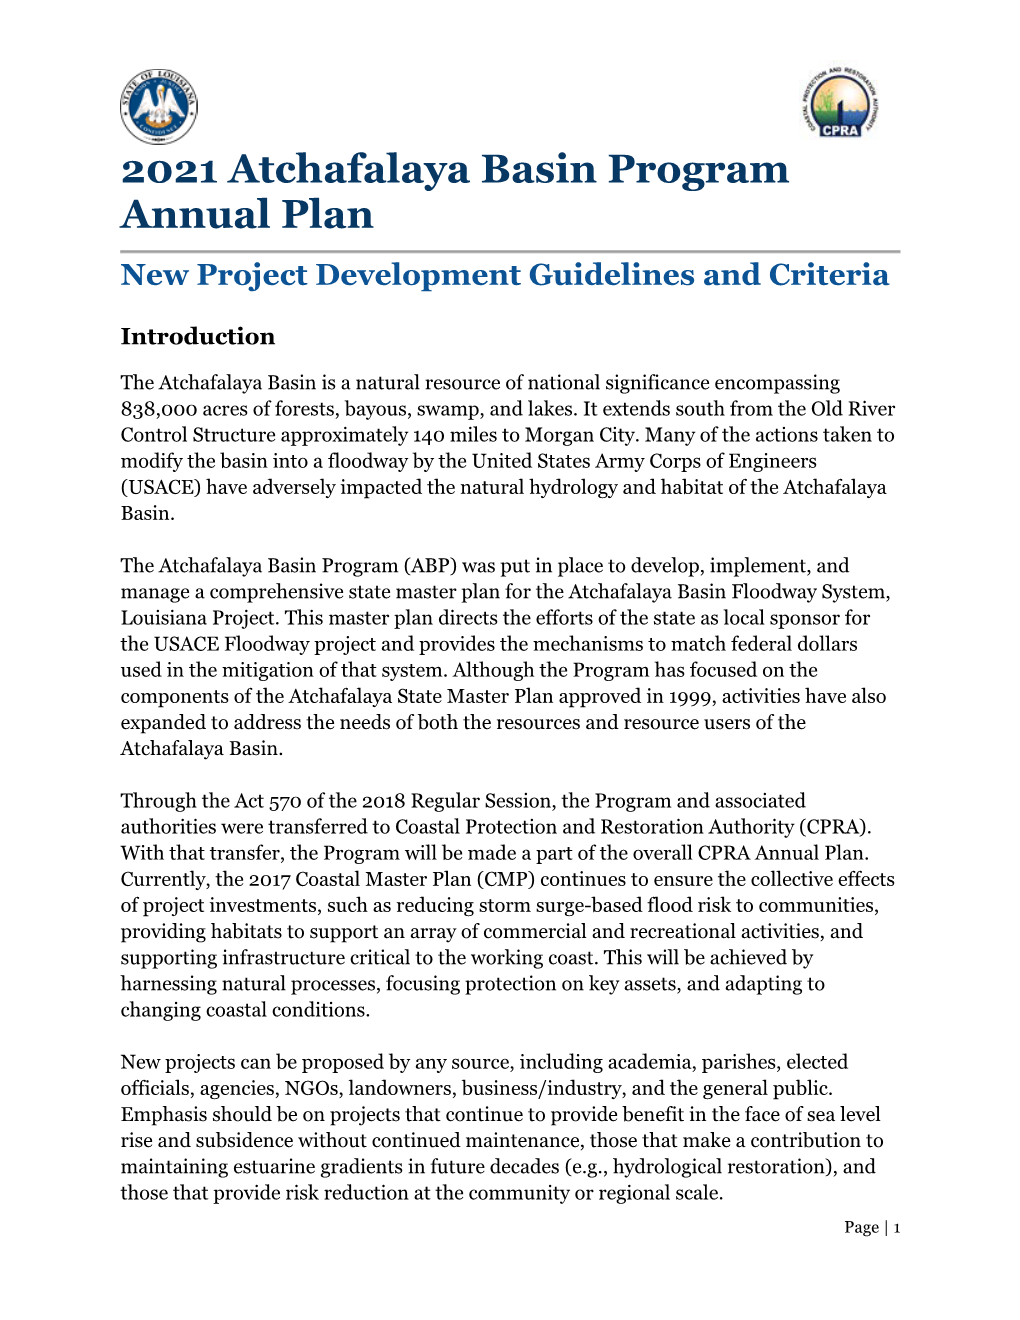 2021 Atchafalaya Basin Program Annual Plan